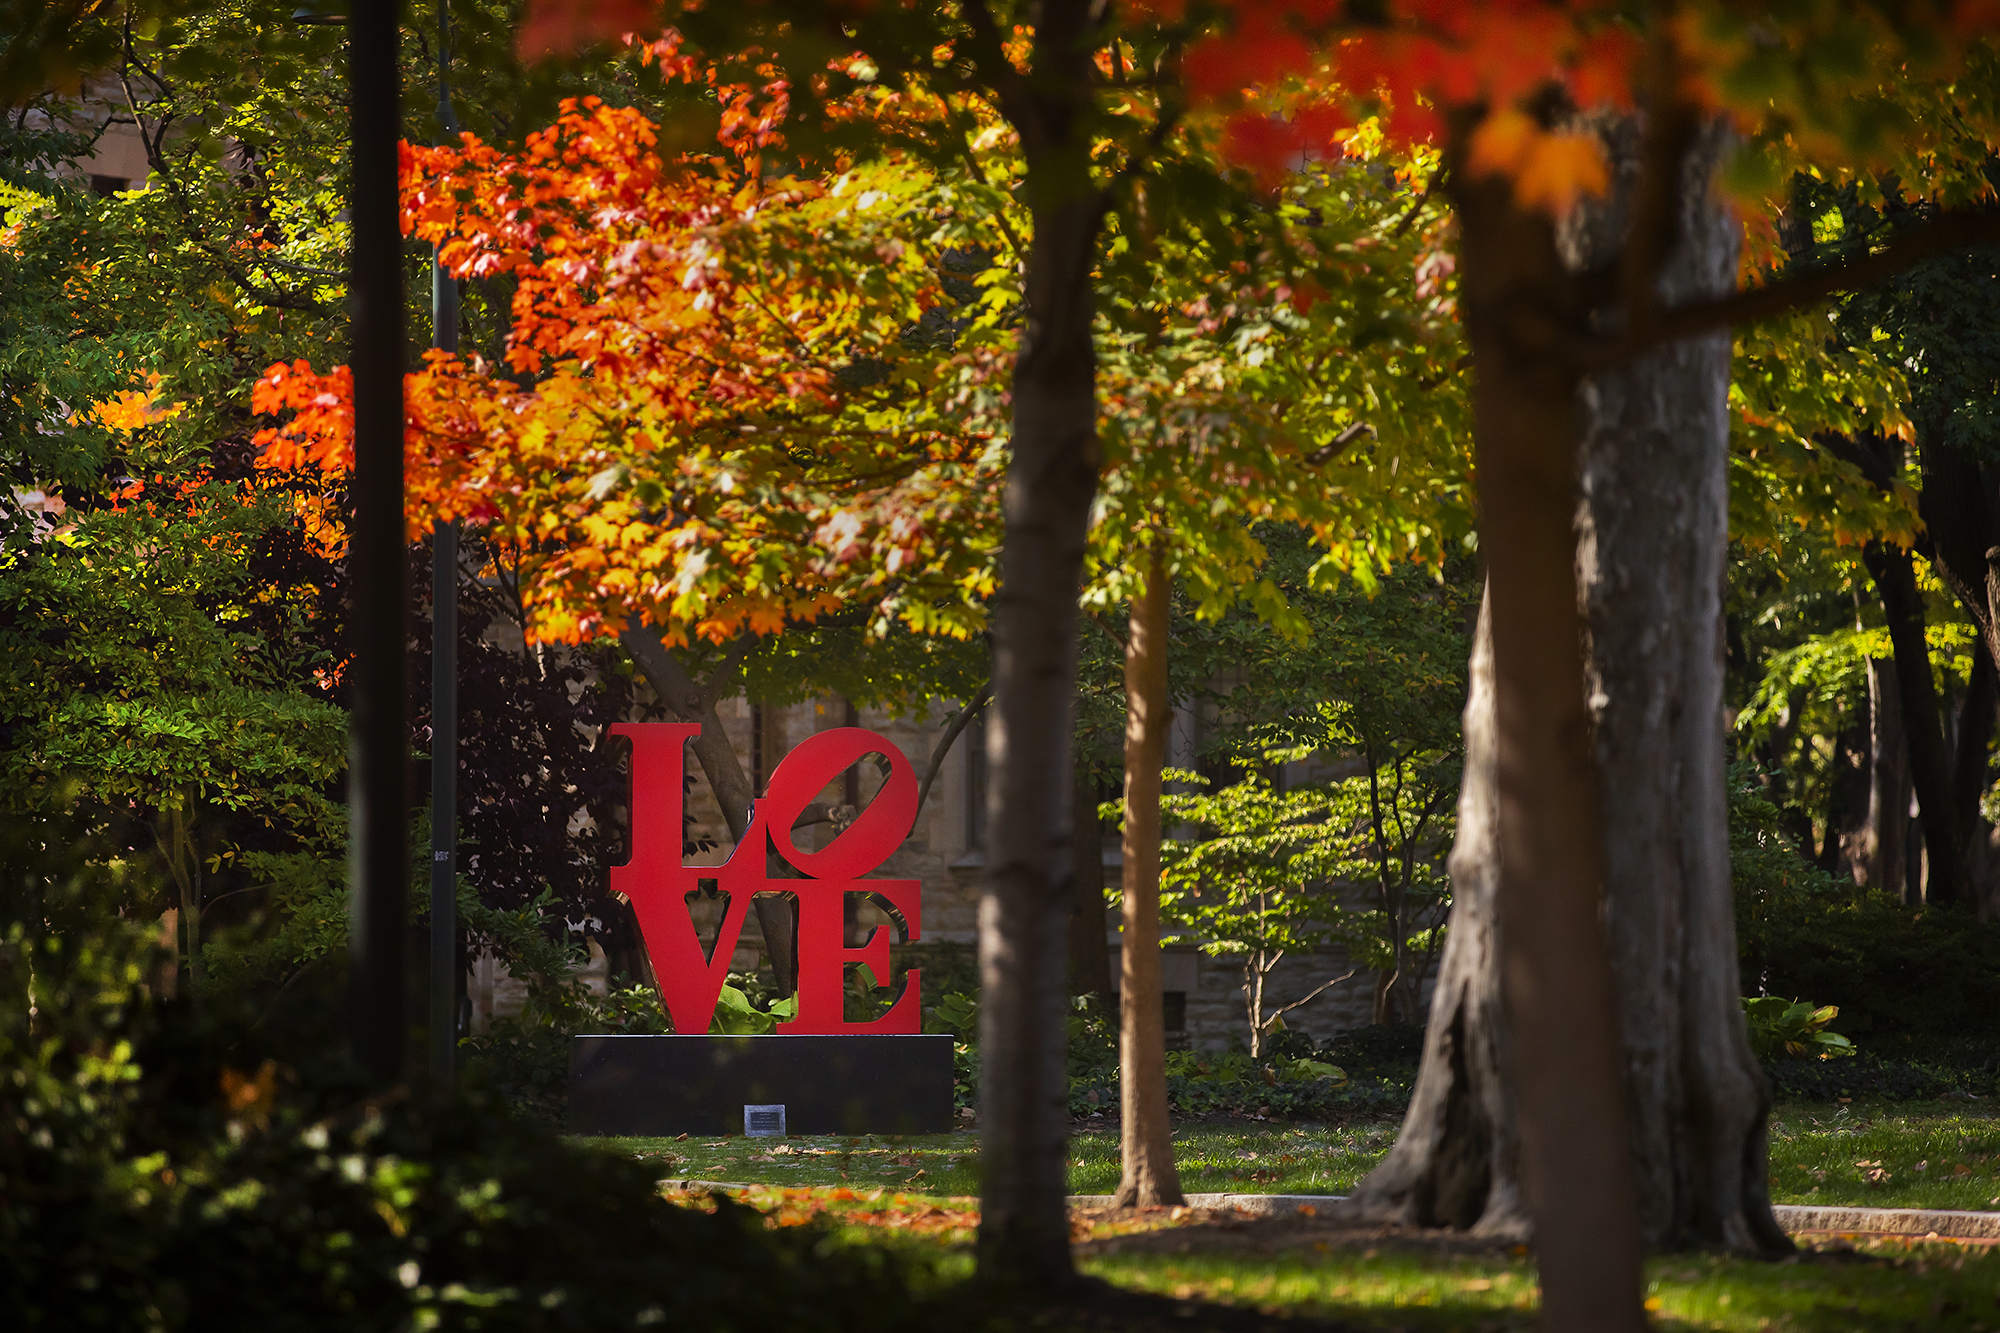 Robert Indiana’s LOVE statue on Penn’s College Green in autumn.